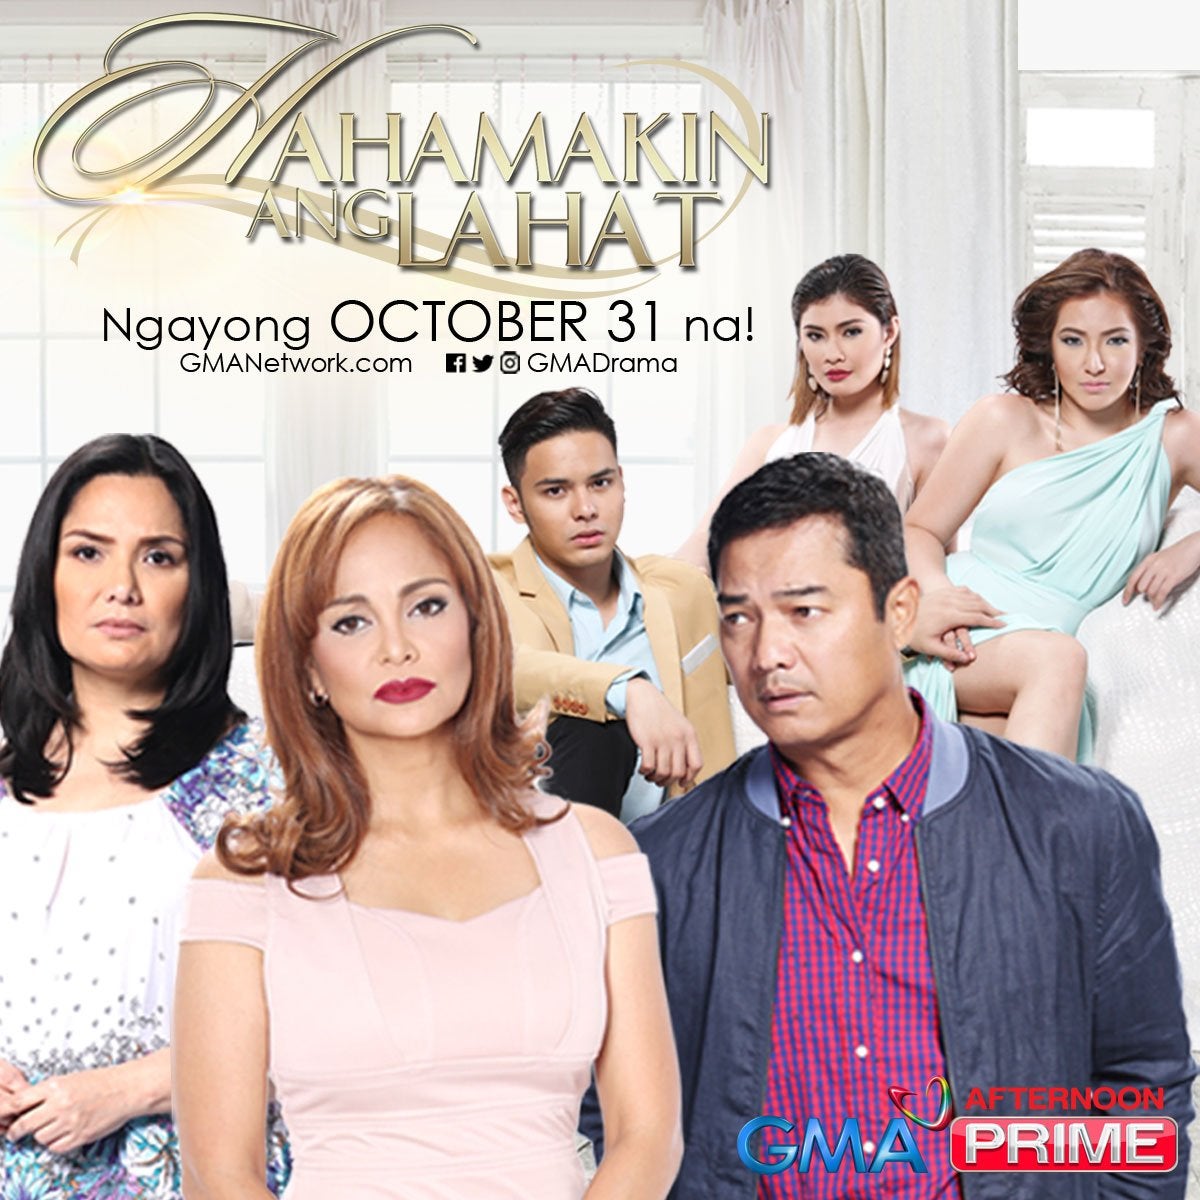 TV ratings for Hahamakin Ang Lahat in Argentina. GMA TV series